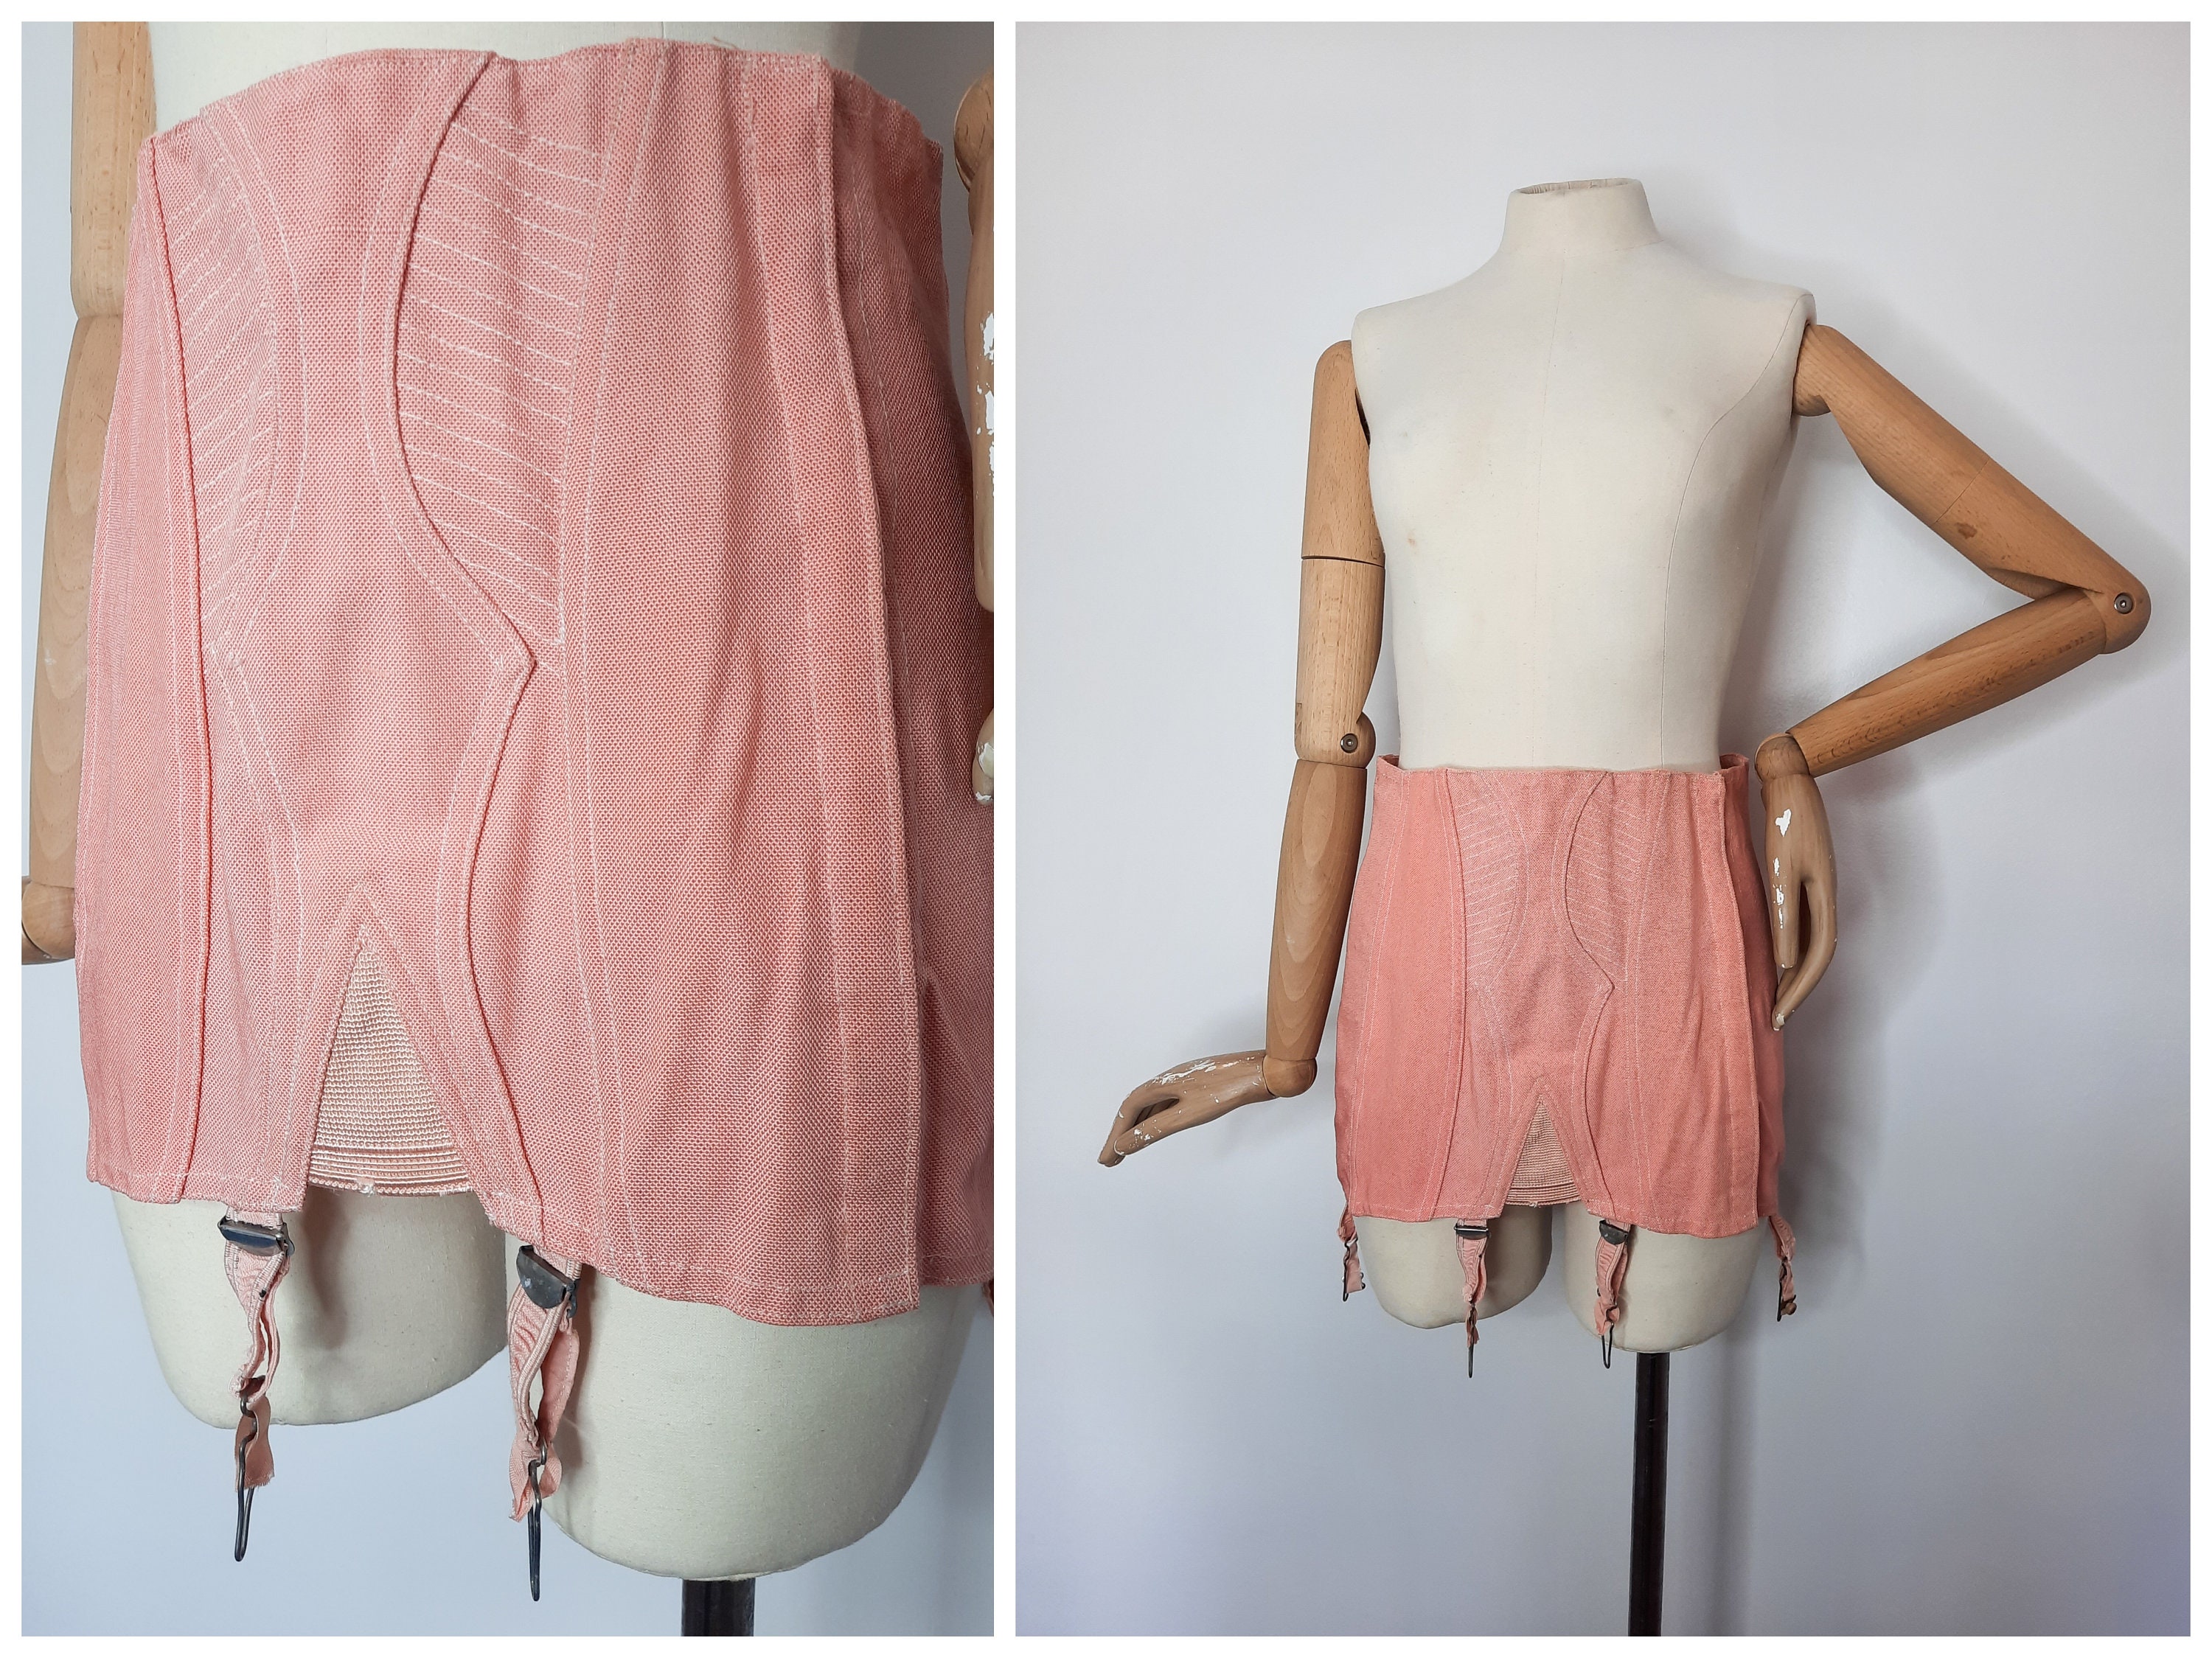 Vintage 30's / 40's Pink Lace up Corset Girdle With Suspender Belt